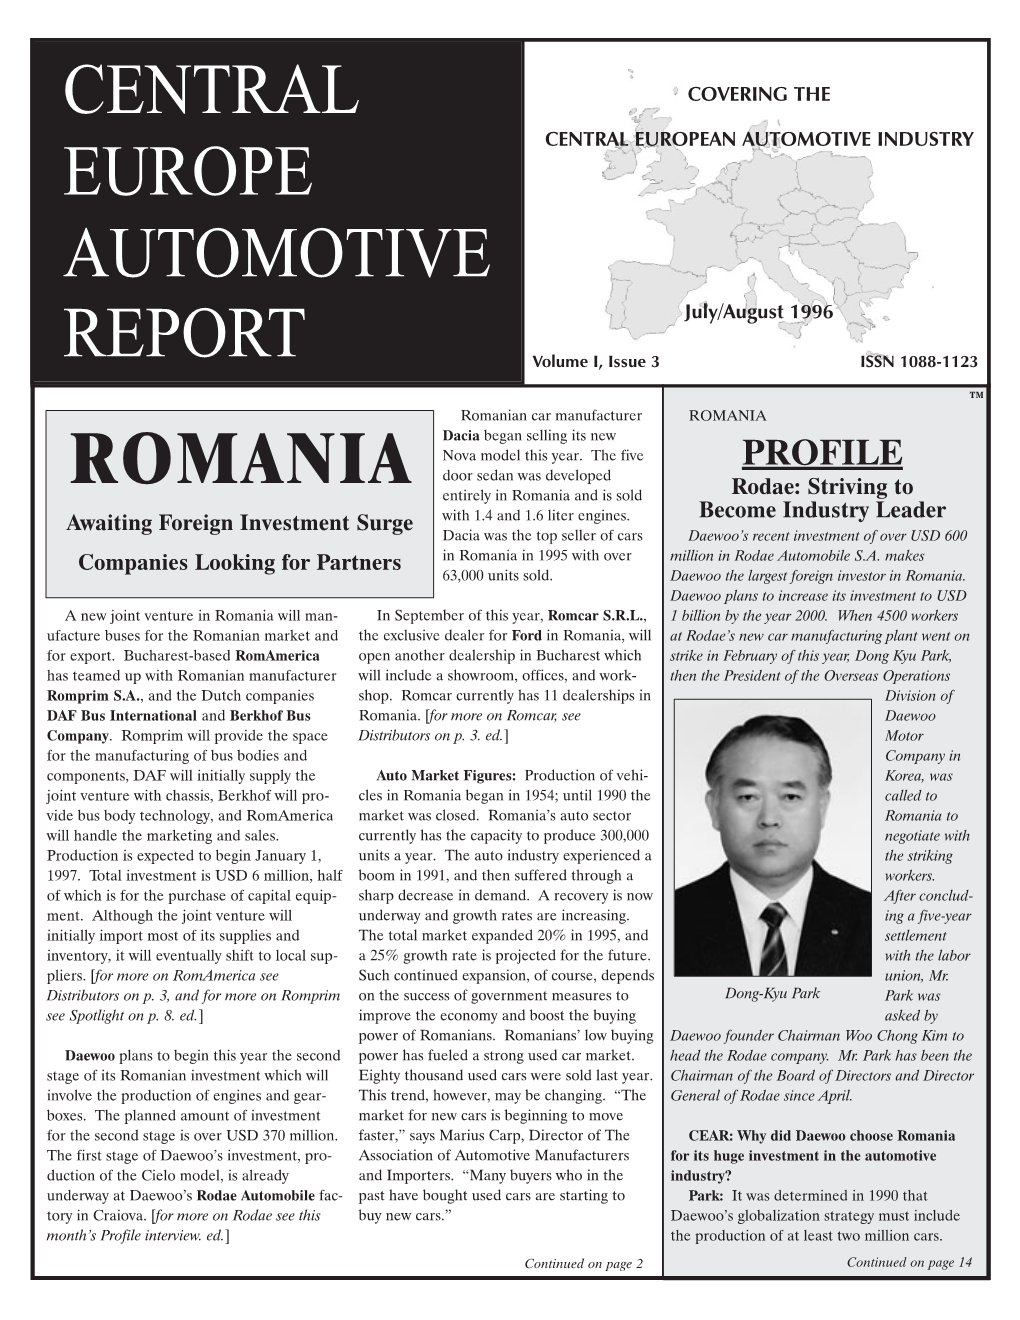 Romanian Car Manufacturer ROMANIA Dacia Began Selling Its New Nova Model This Year